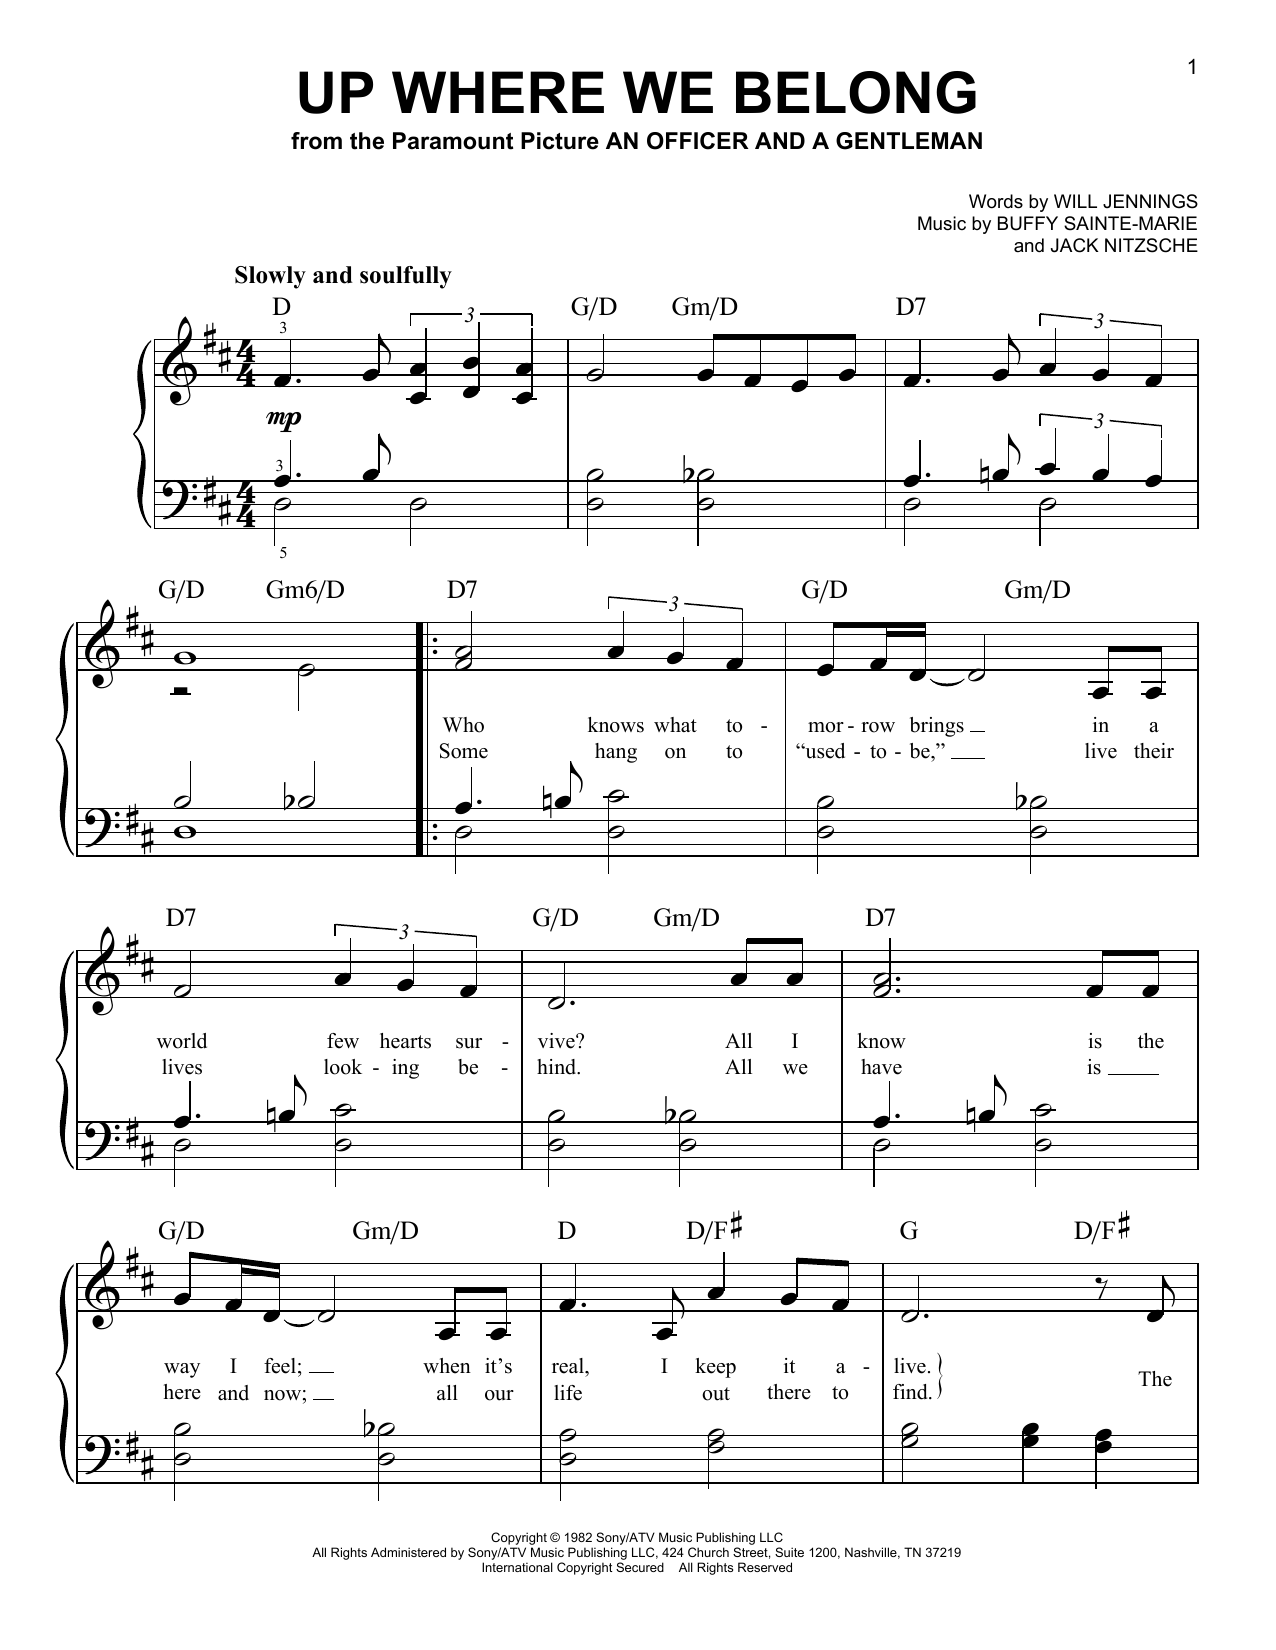 Up Where We Belong Sheet Music by Joe Cocker for Piano/Keyboard - Notefligh...